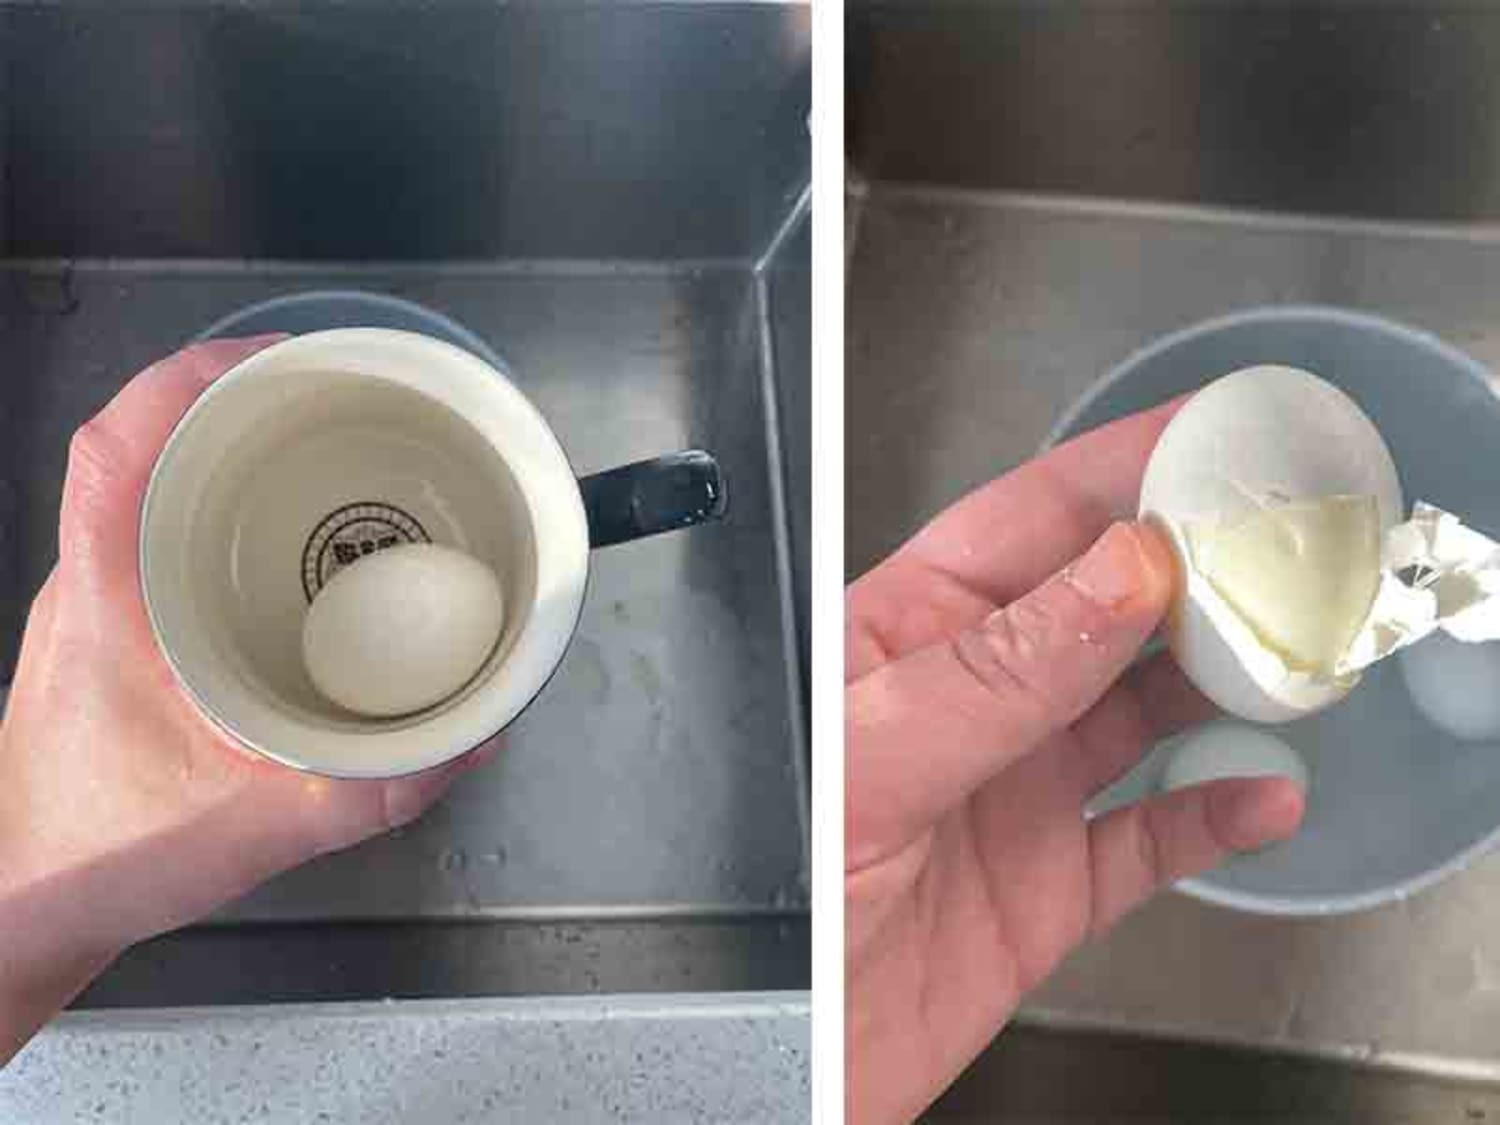 Woman's Hard-Boiled-Egg Slicing Technique for Deviled Eggs Goes Viral